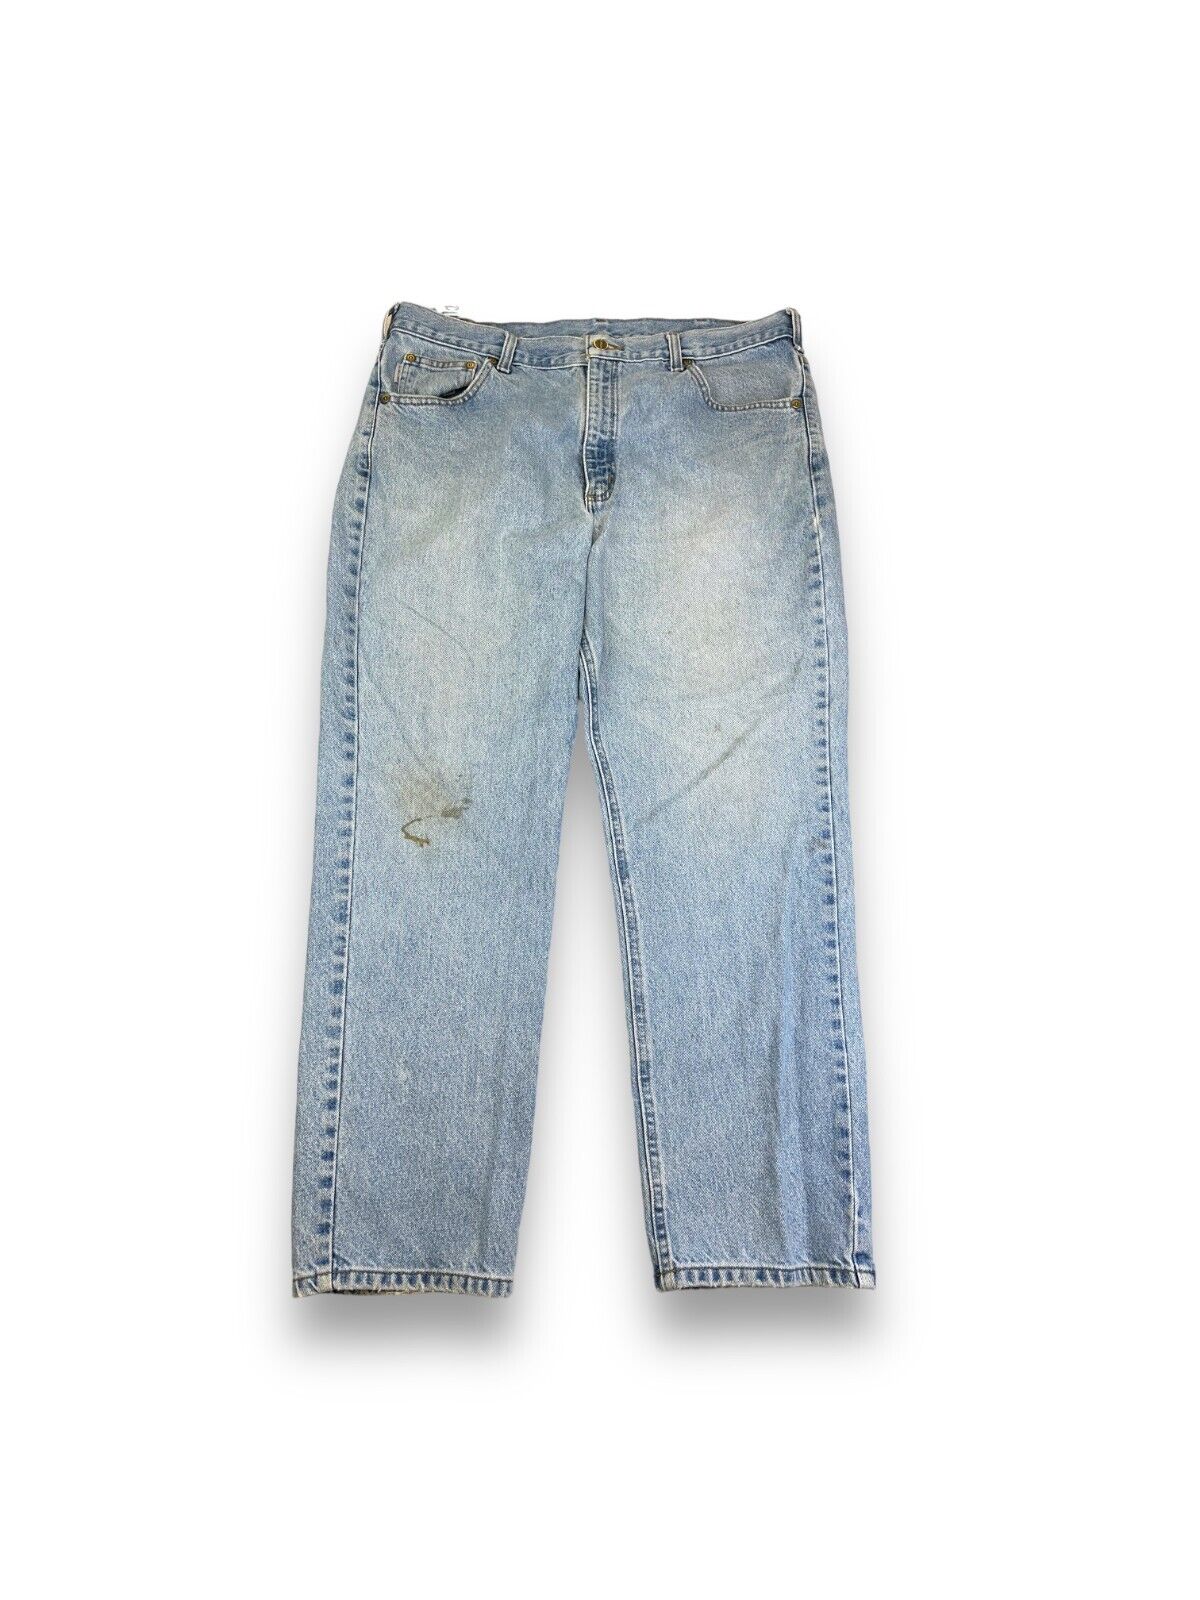 Vintage Carhartt Traditional Fit Light Wash Denim Workwear Pants Size 38W